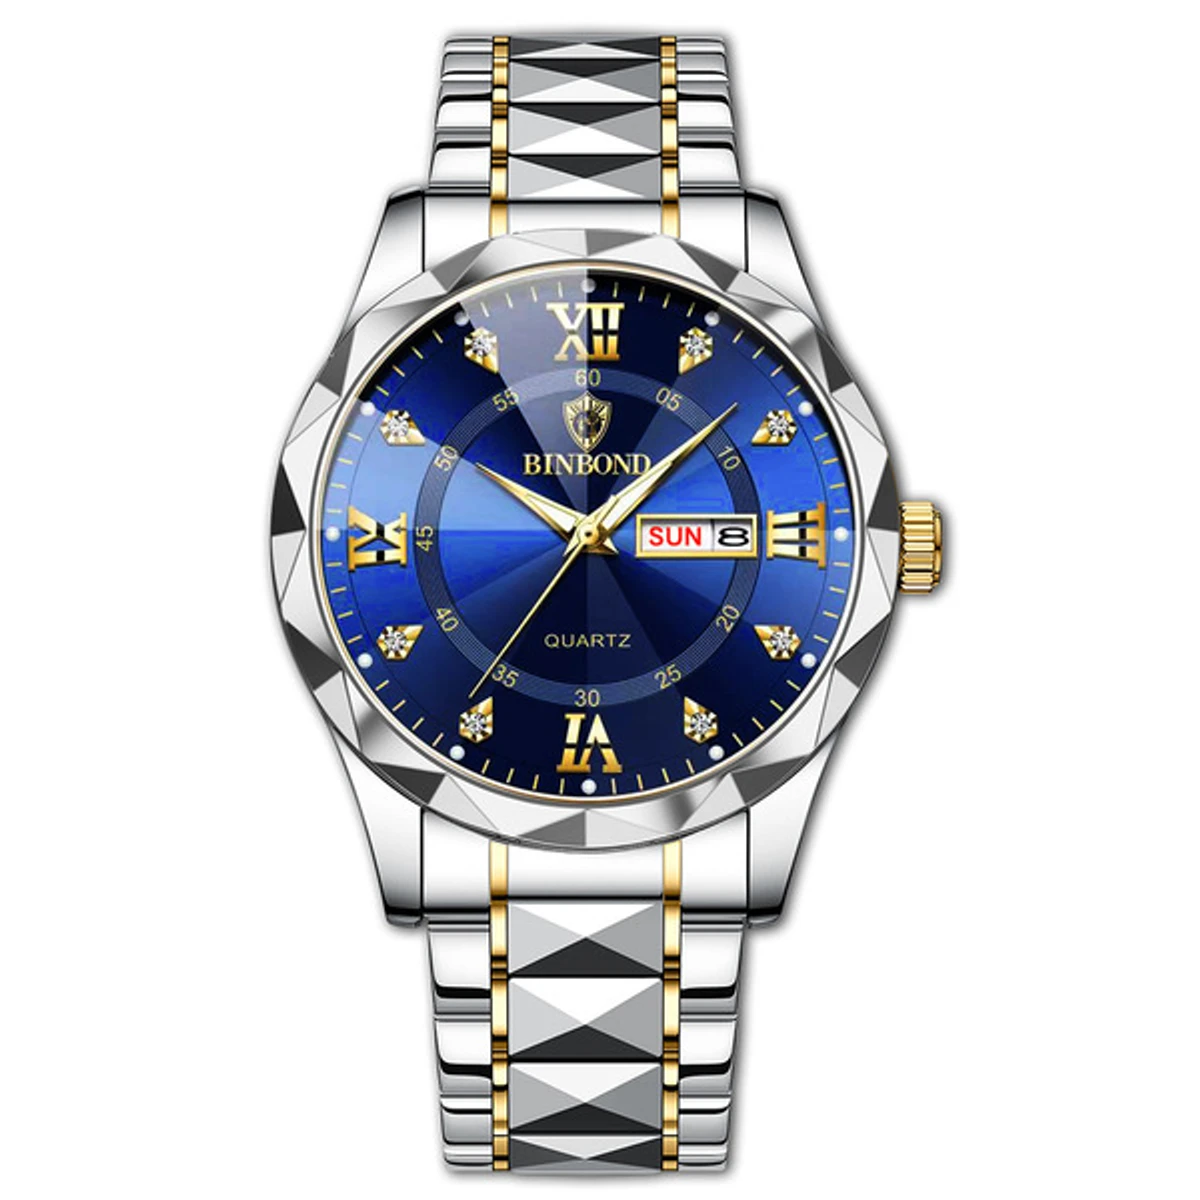 Luxury Binbond authentic men's watch waterproof night light dual calendar watch men's quartz watch diamond ceiling glass- Blue.